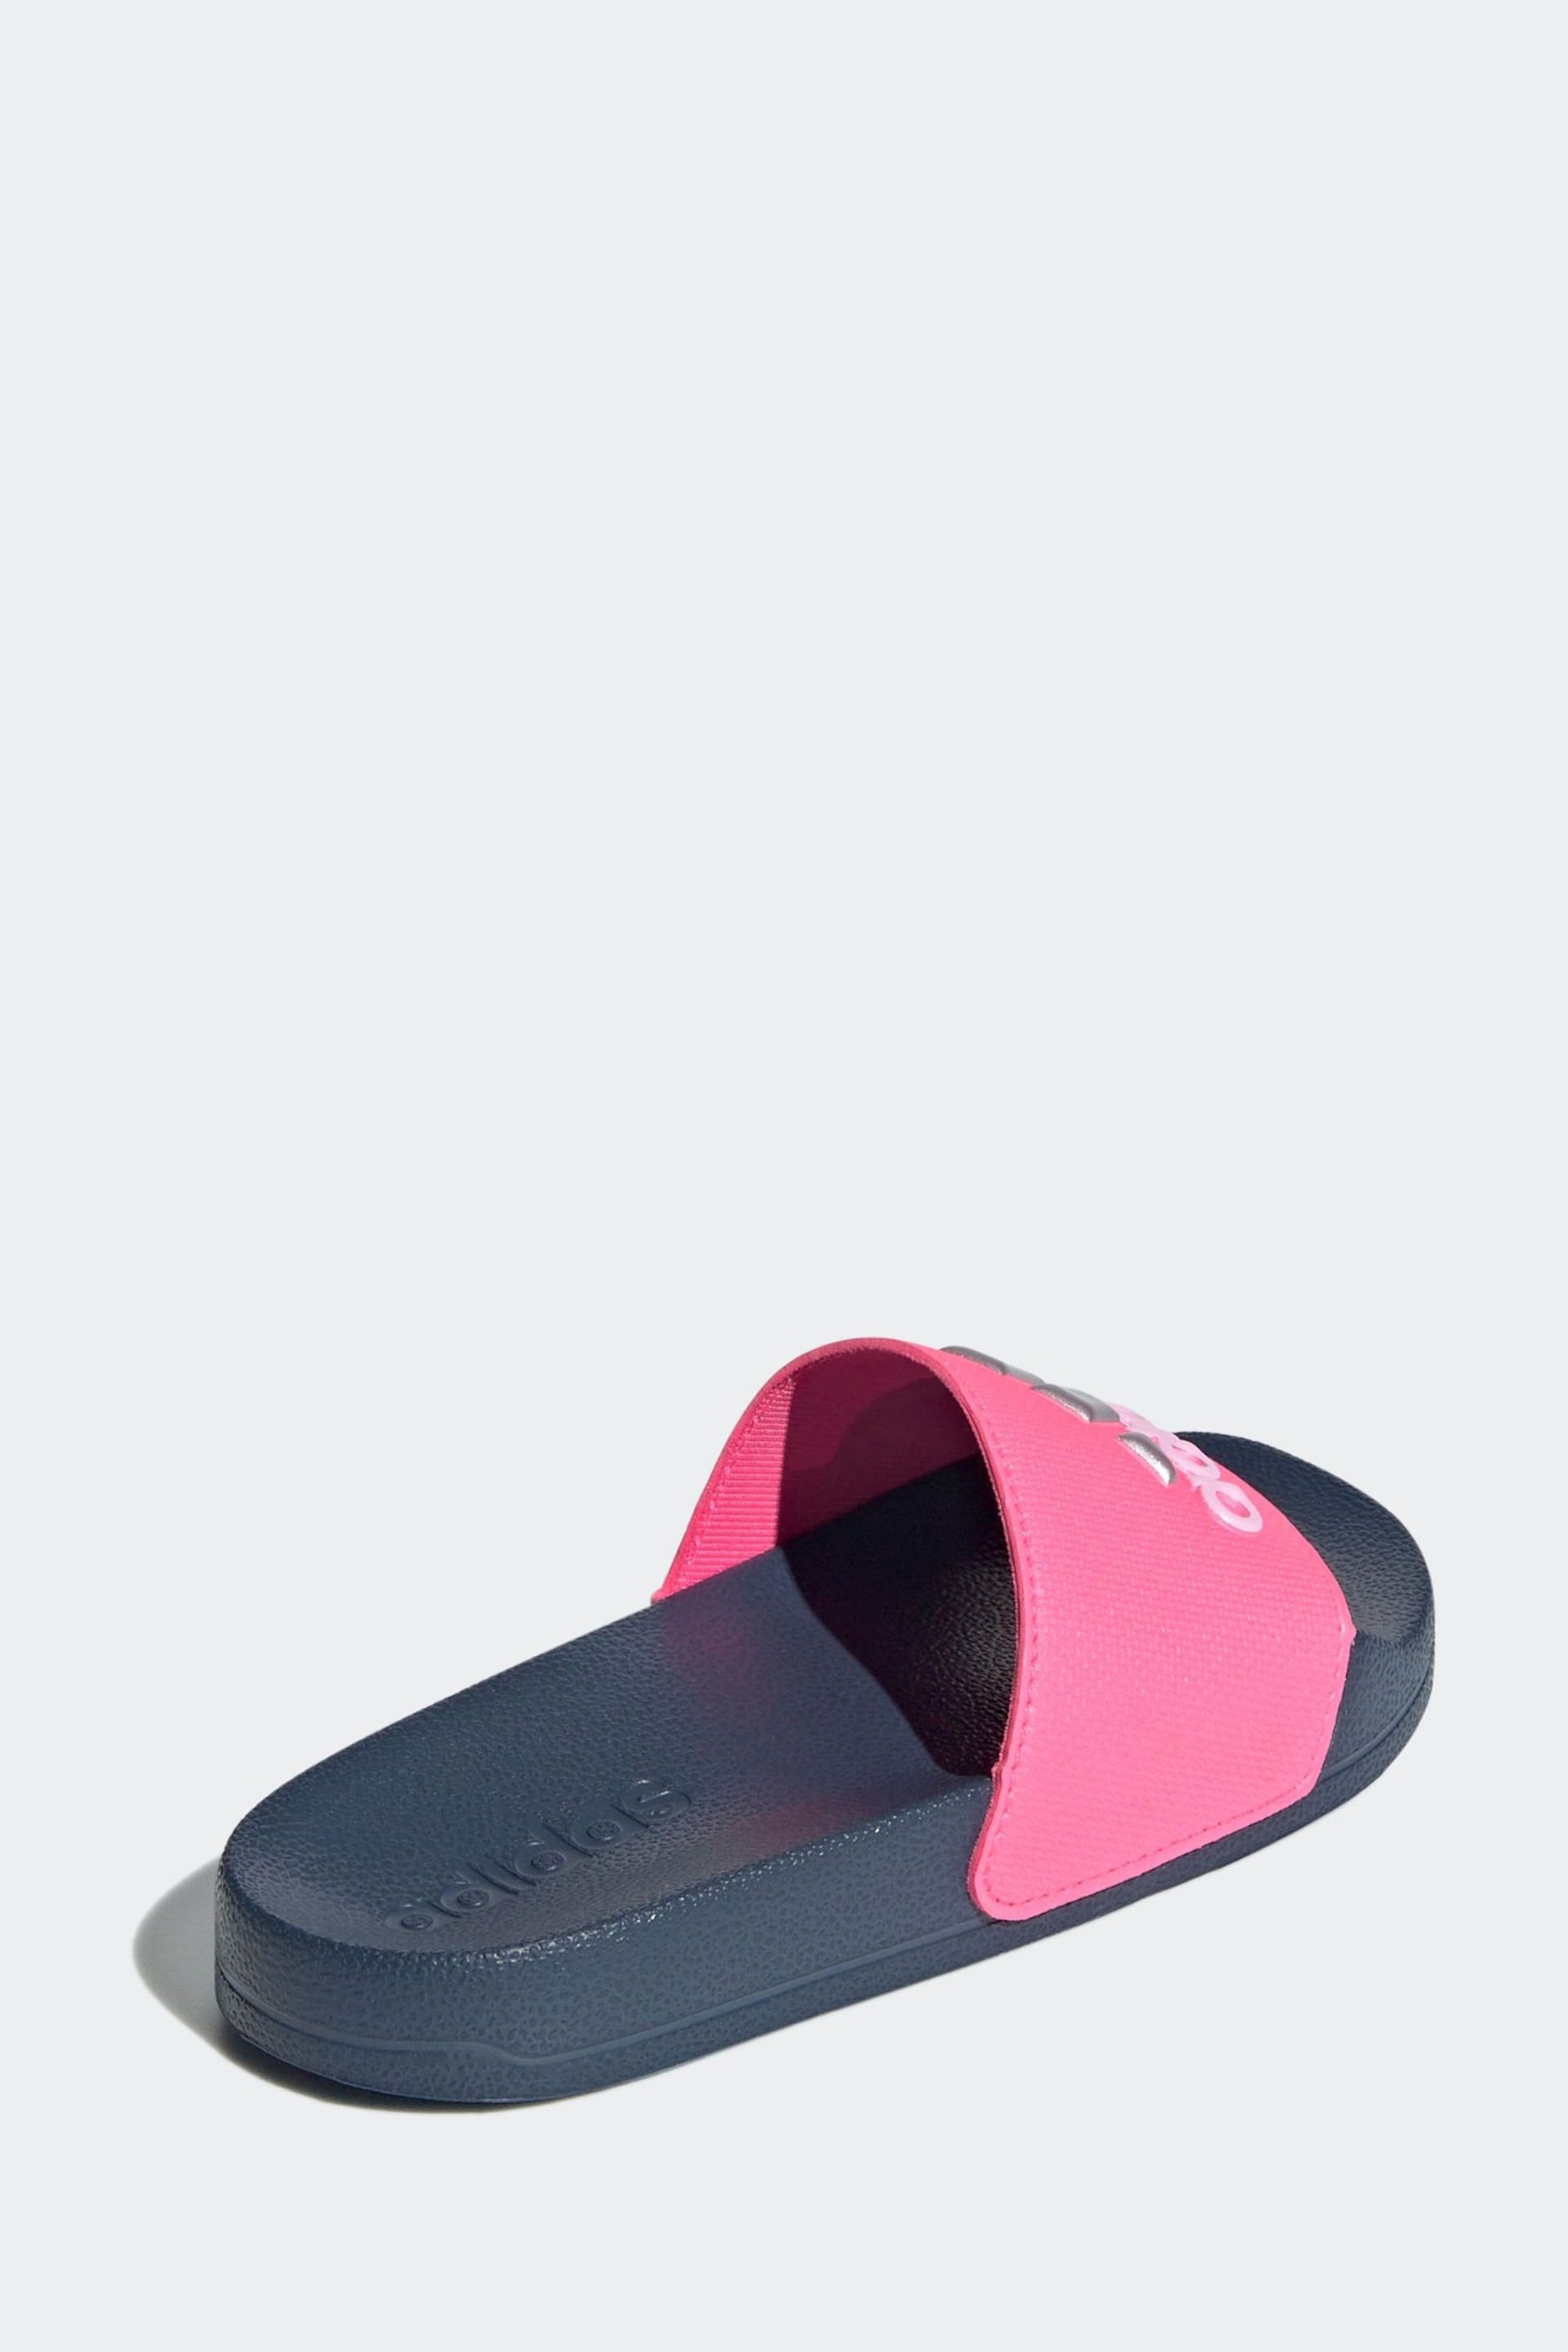 adidas Dark Pink Kids Adilette Youth Sliders - Image 4 of 8